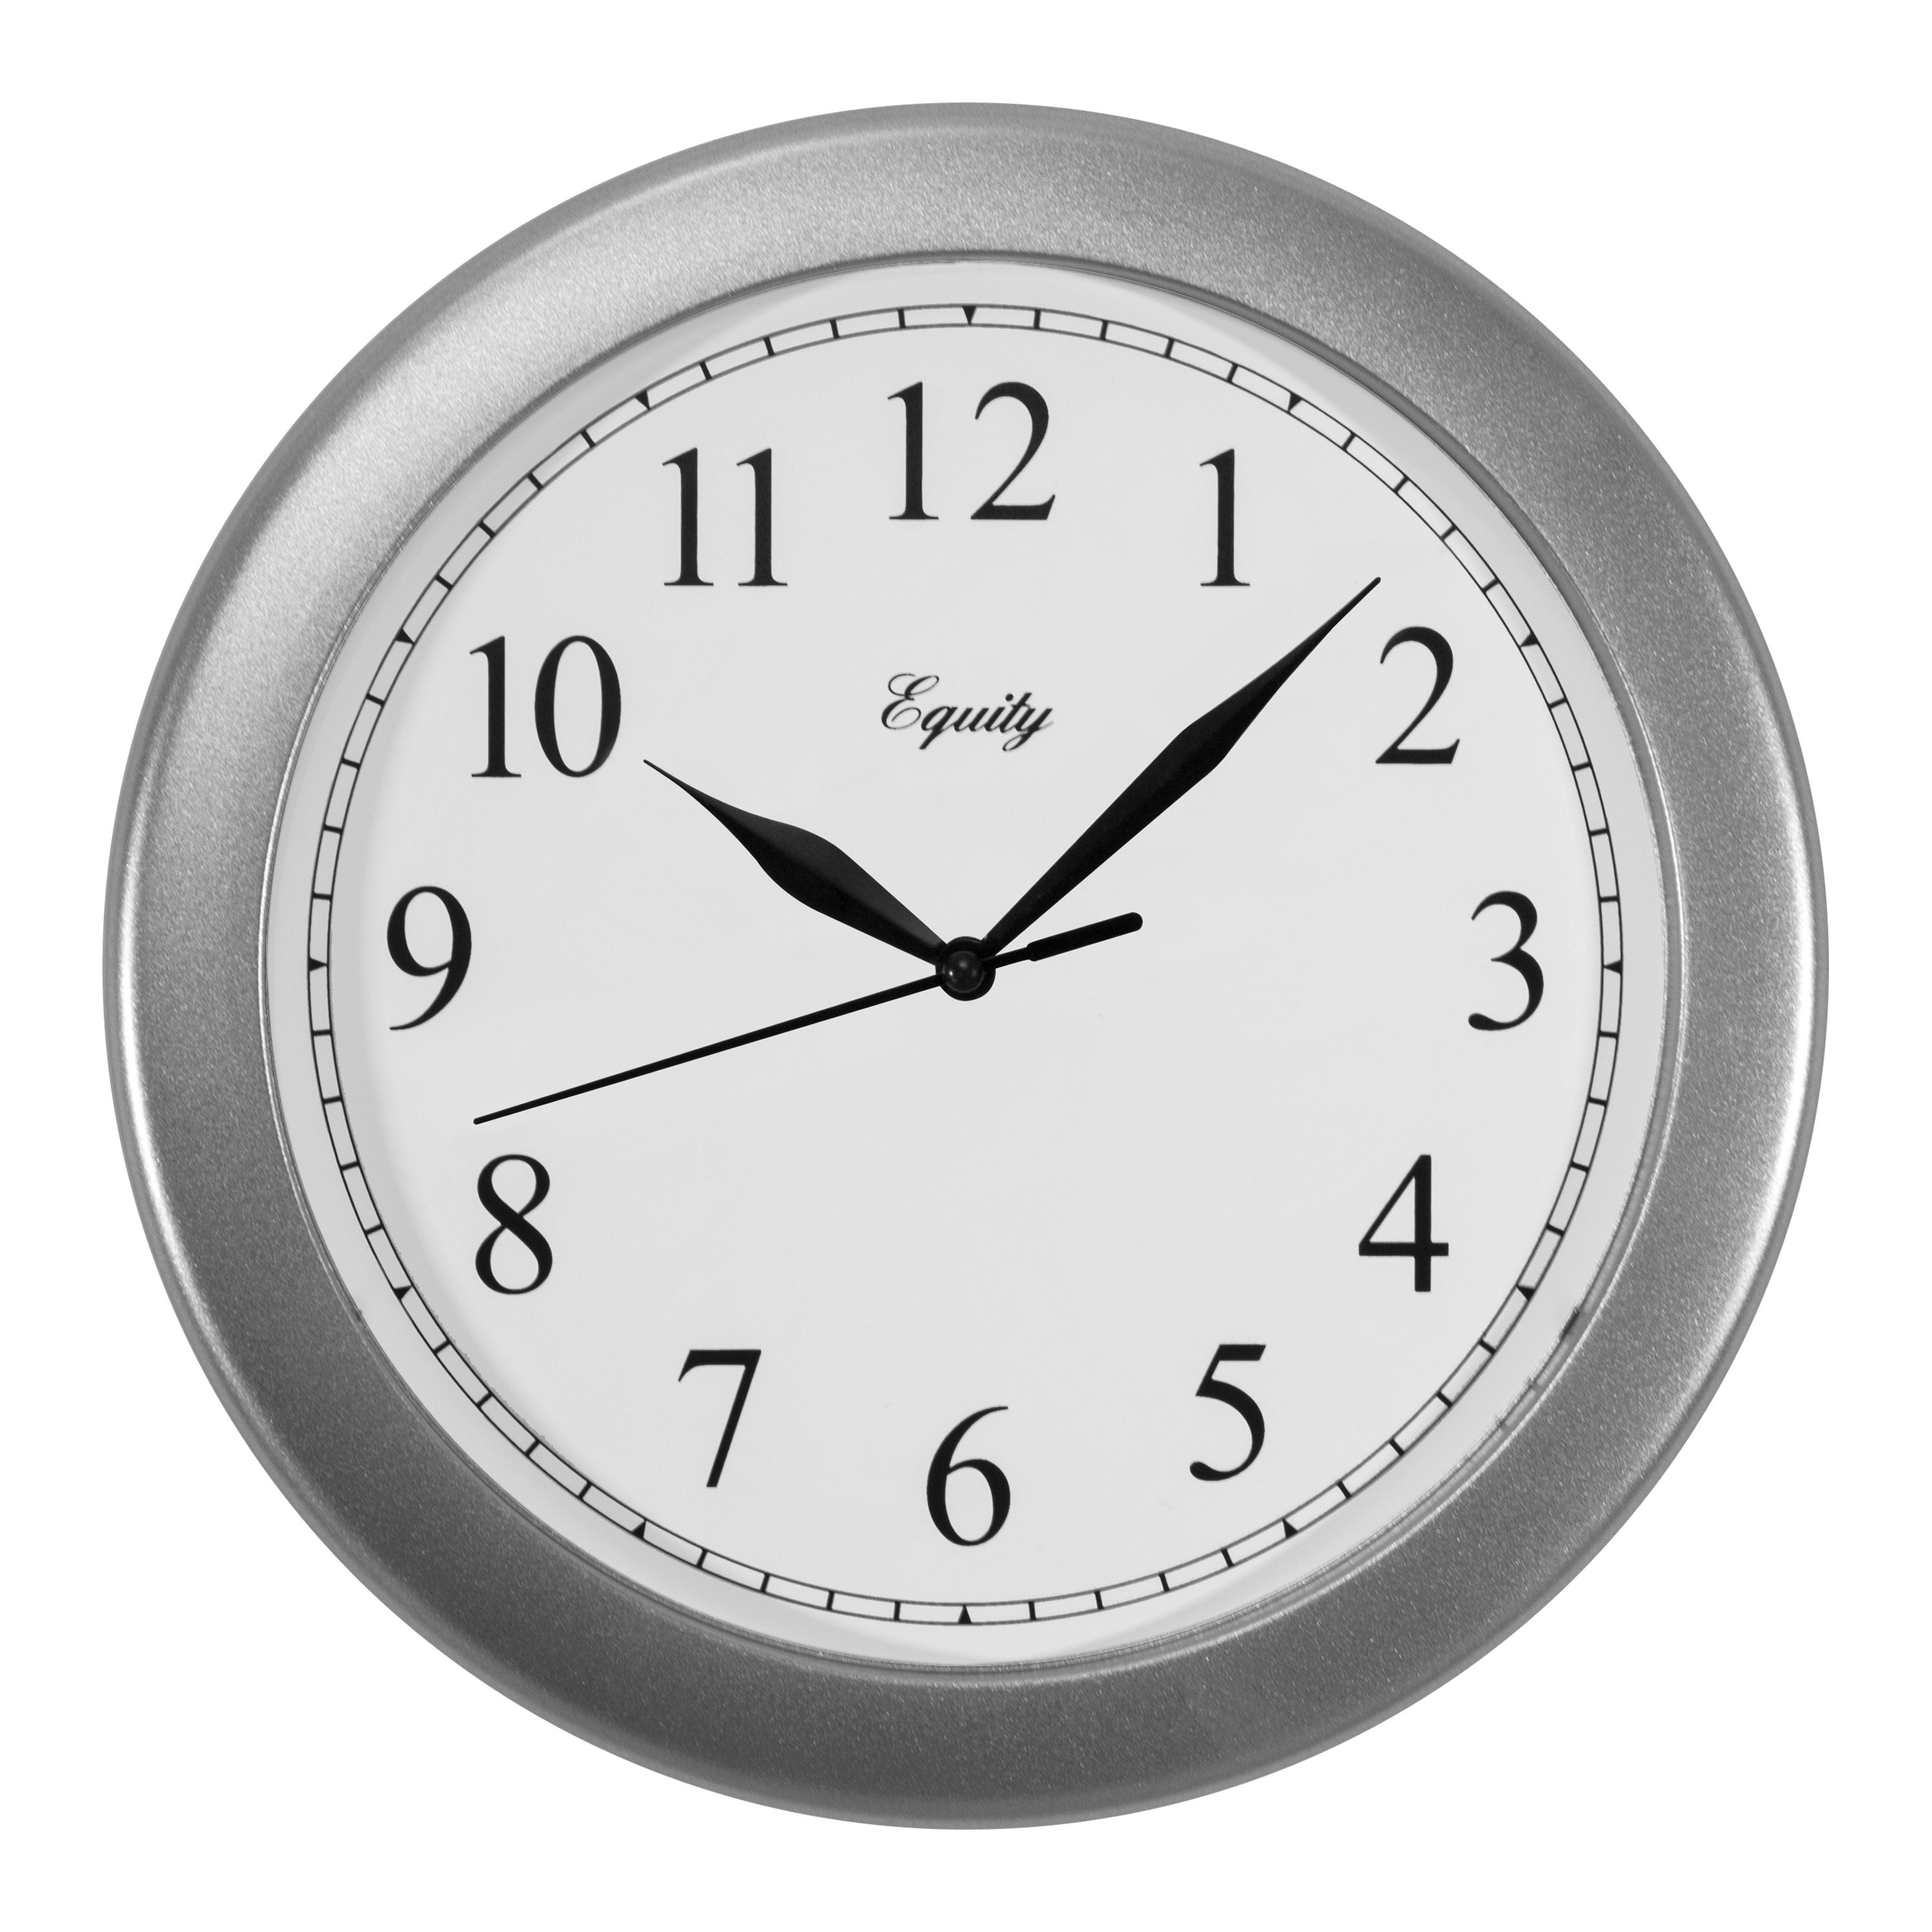 Picture of La Crosse Technology Ltd 25206 10 in. Quartz Wall Clock